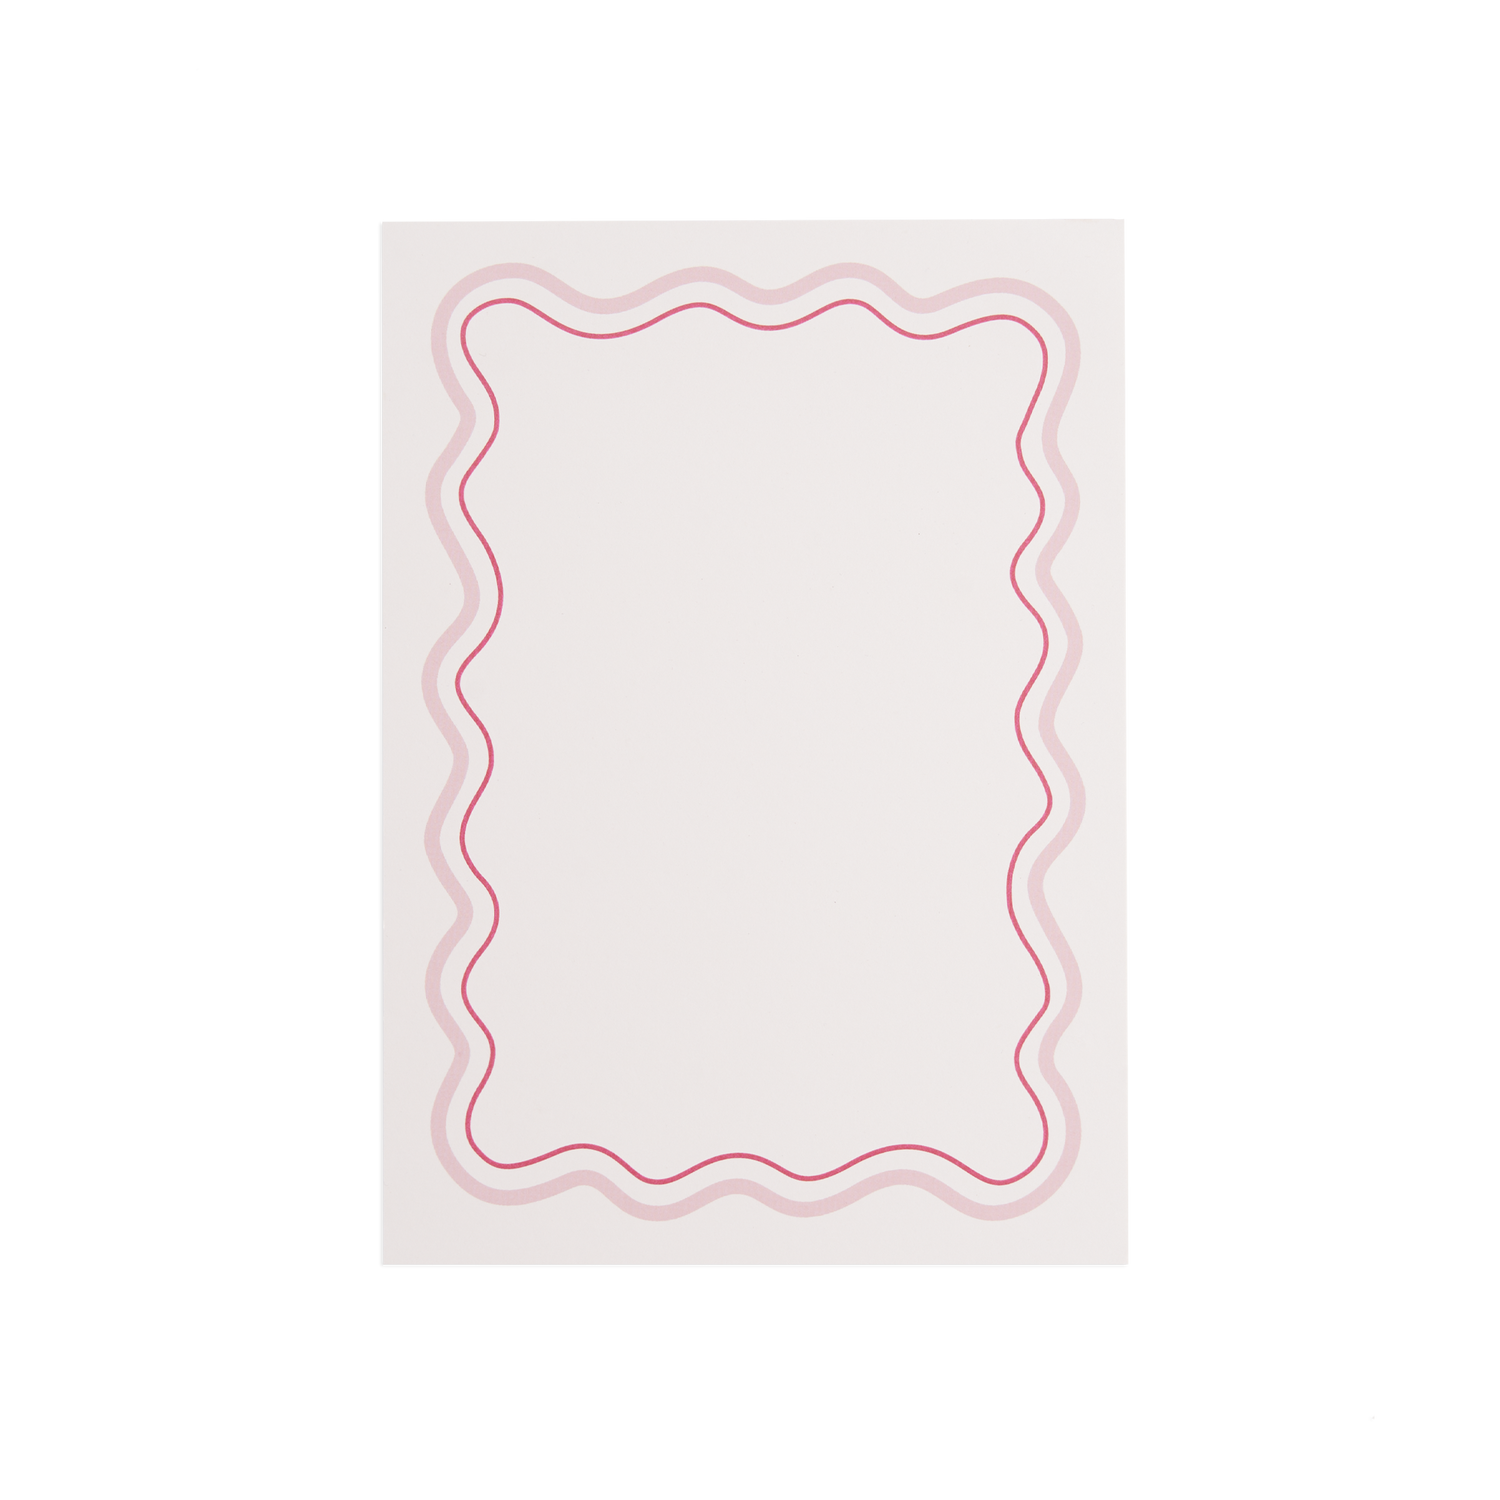 Scallop menykort - Rosa 14,85x21 cm